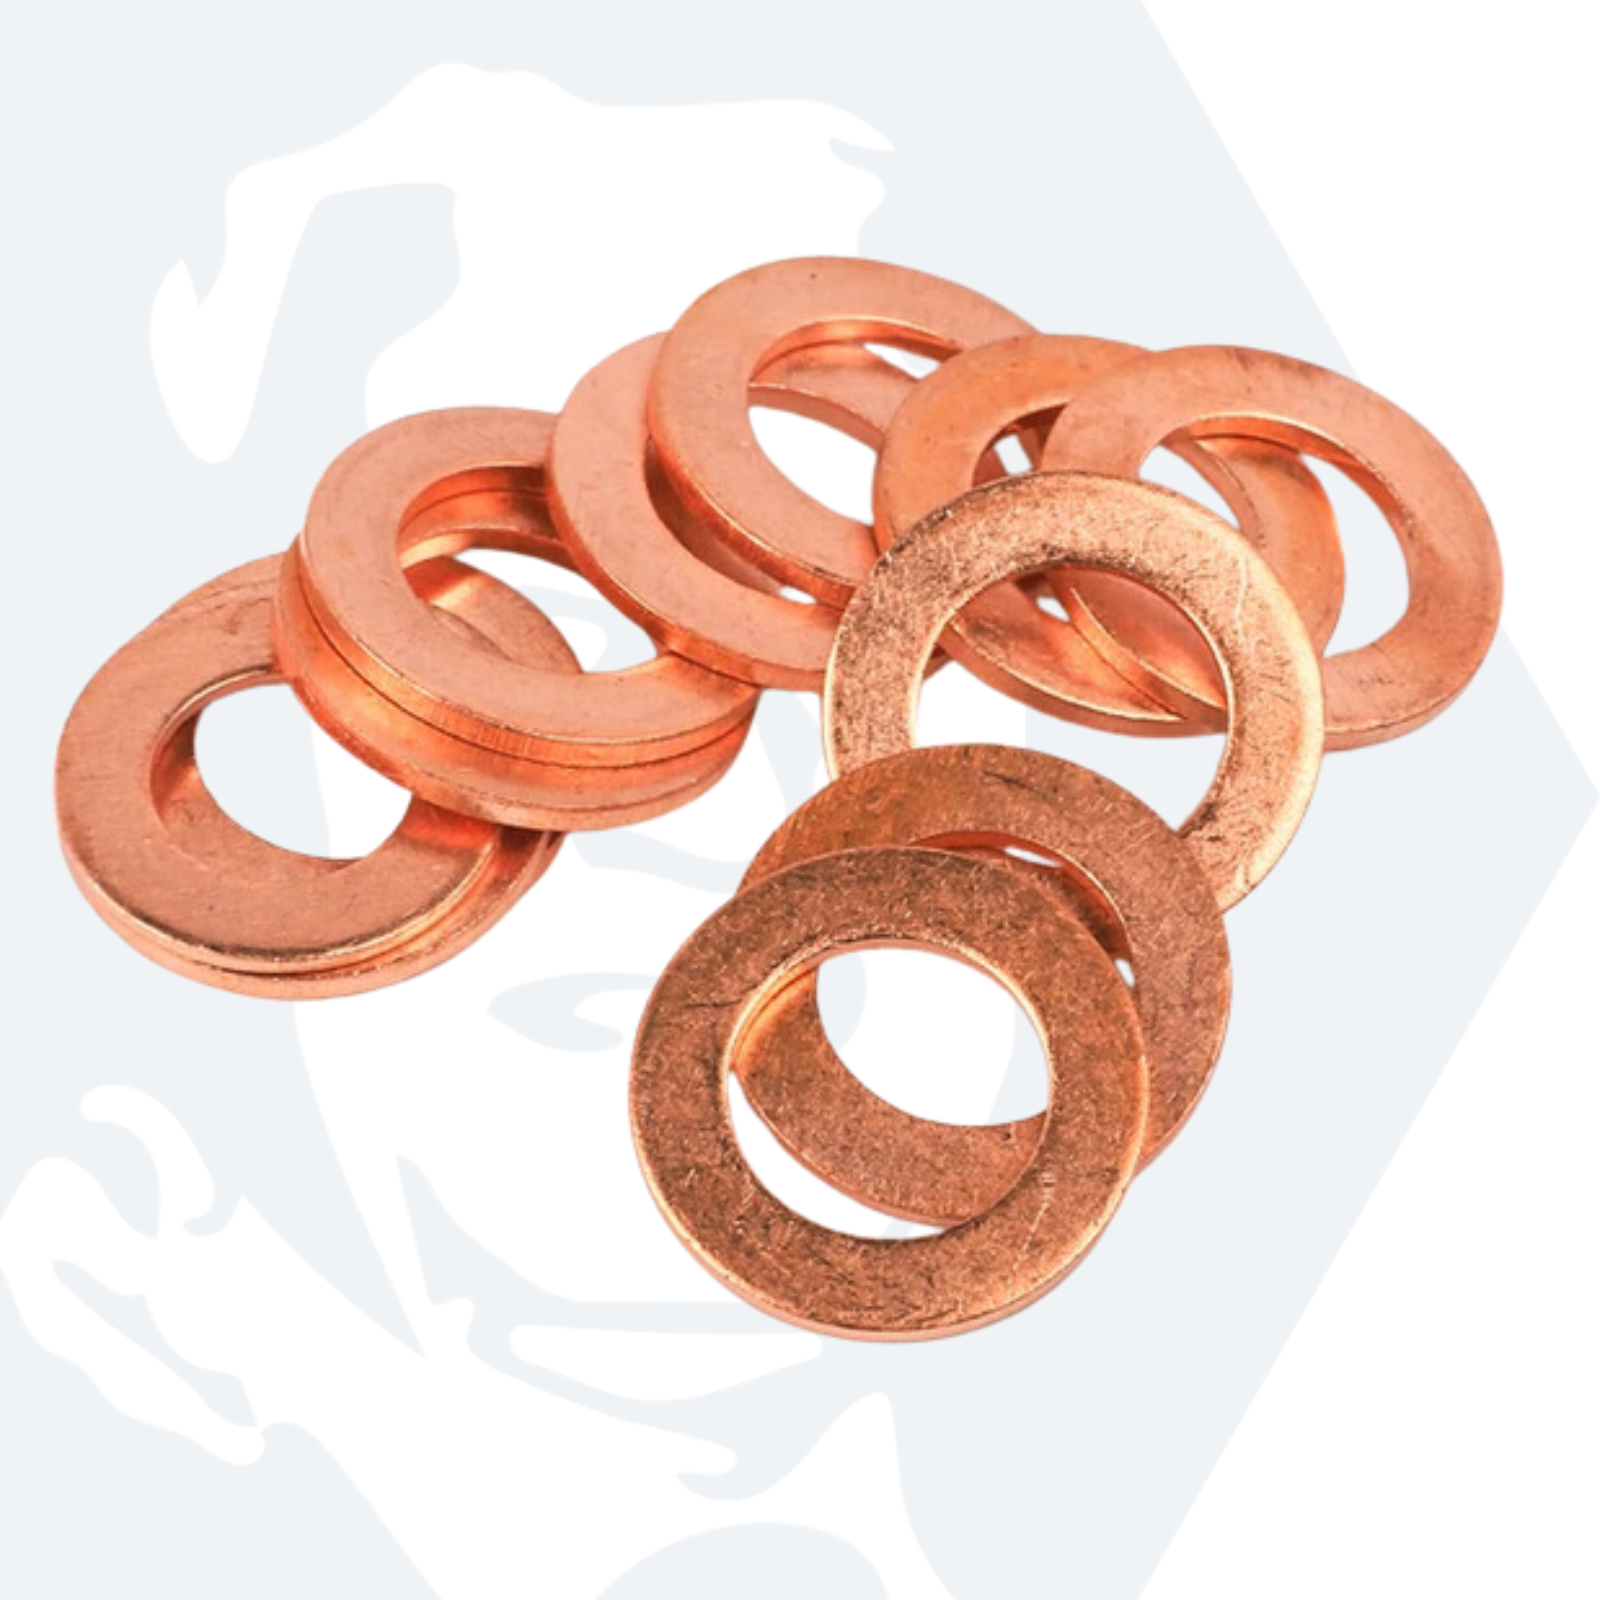 M8 x 14mm x 1mm Sealing Washers - Copper